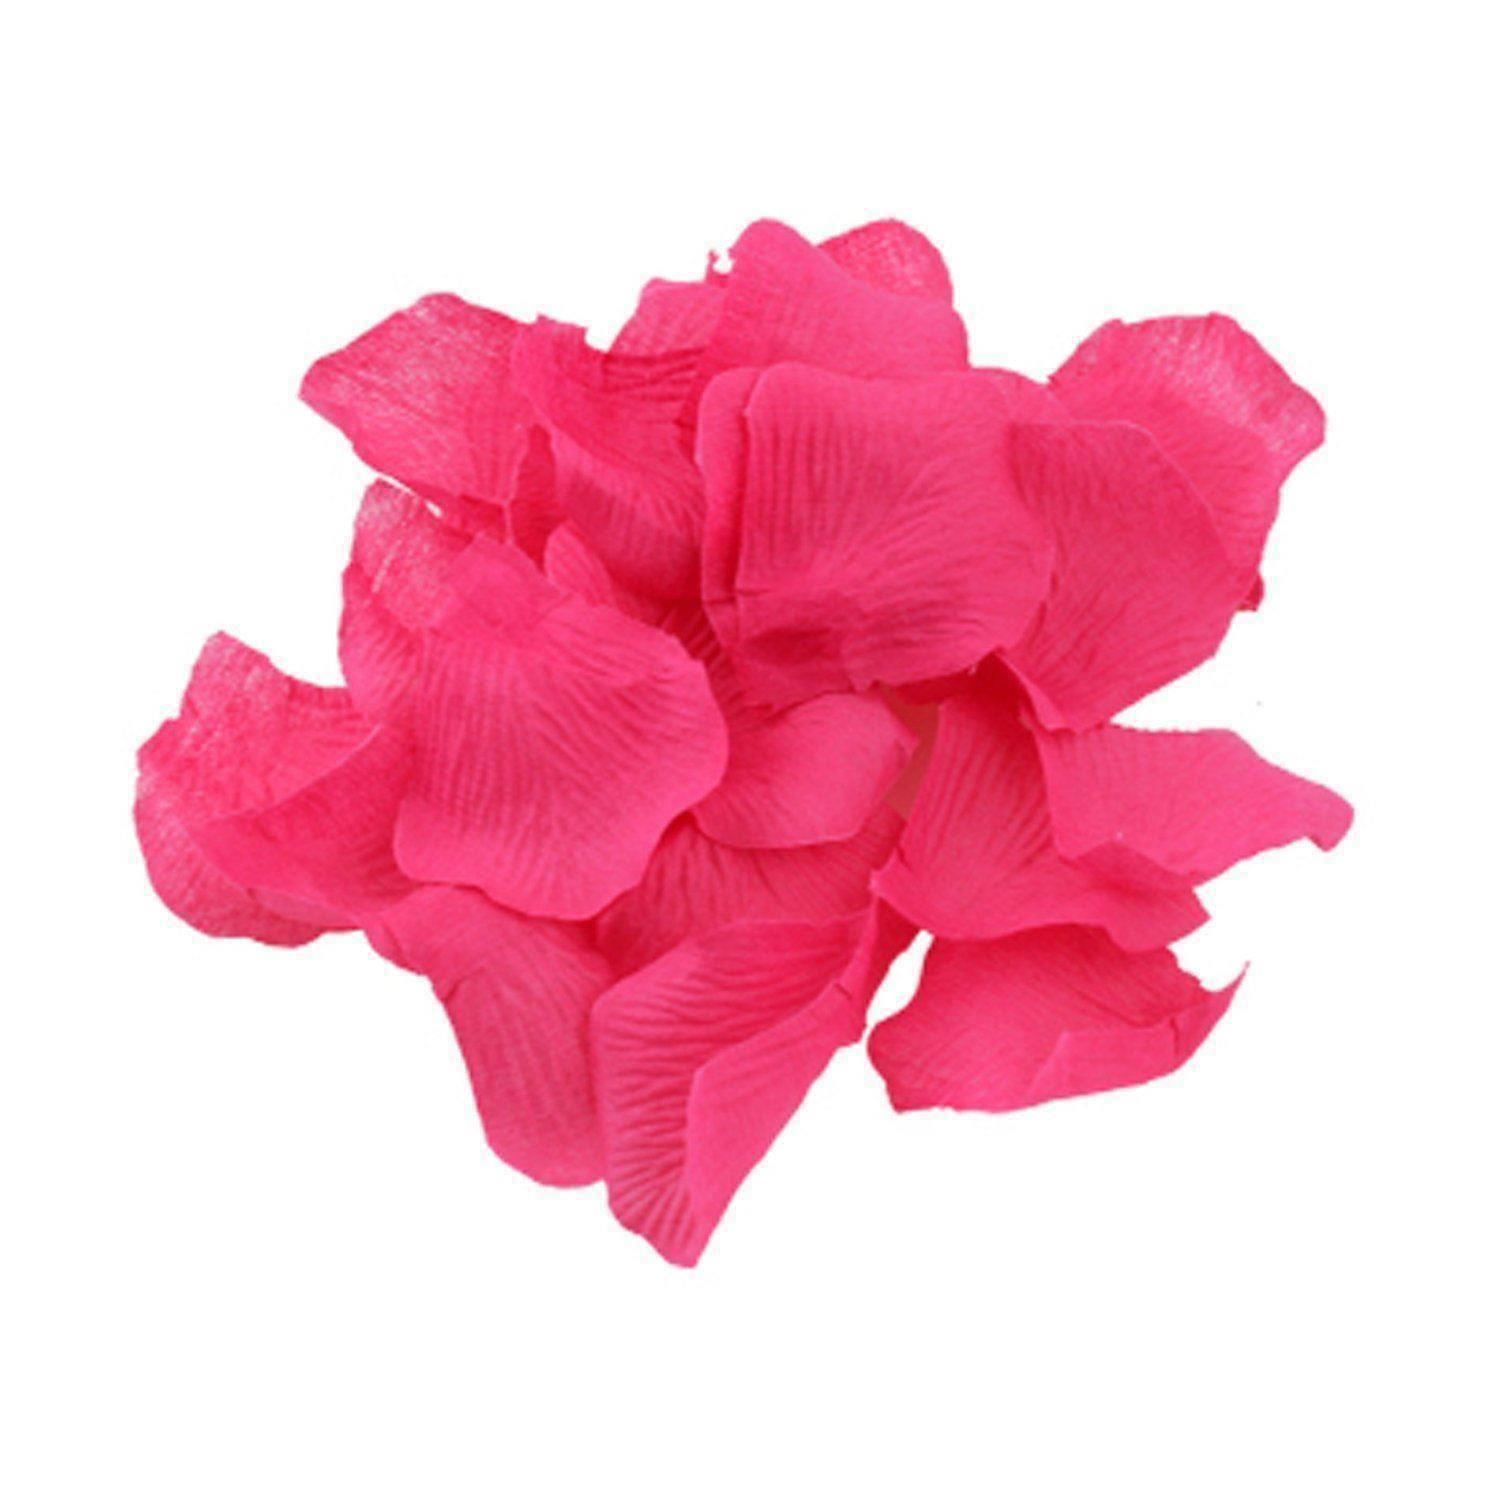 500 Hot Pink Rose Petals Confetti Birthday Anniversary Wedding Party Decorations 